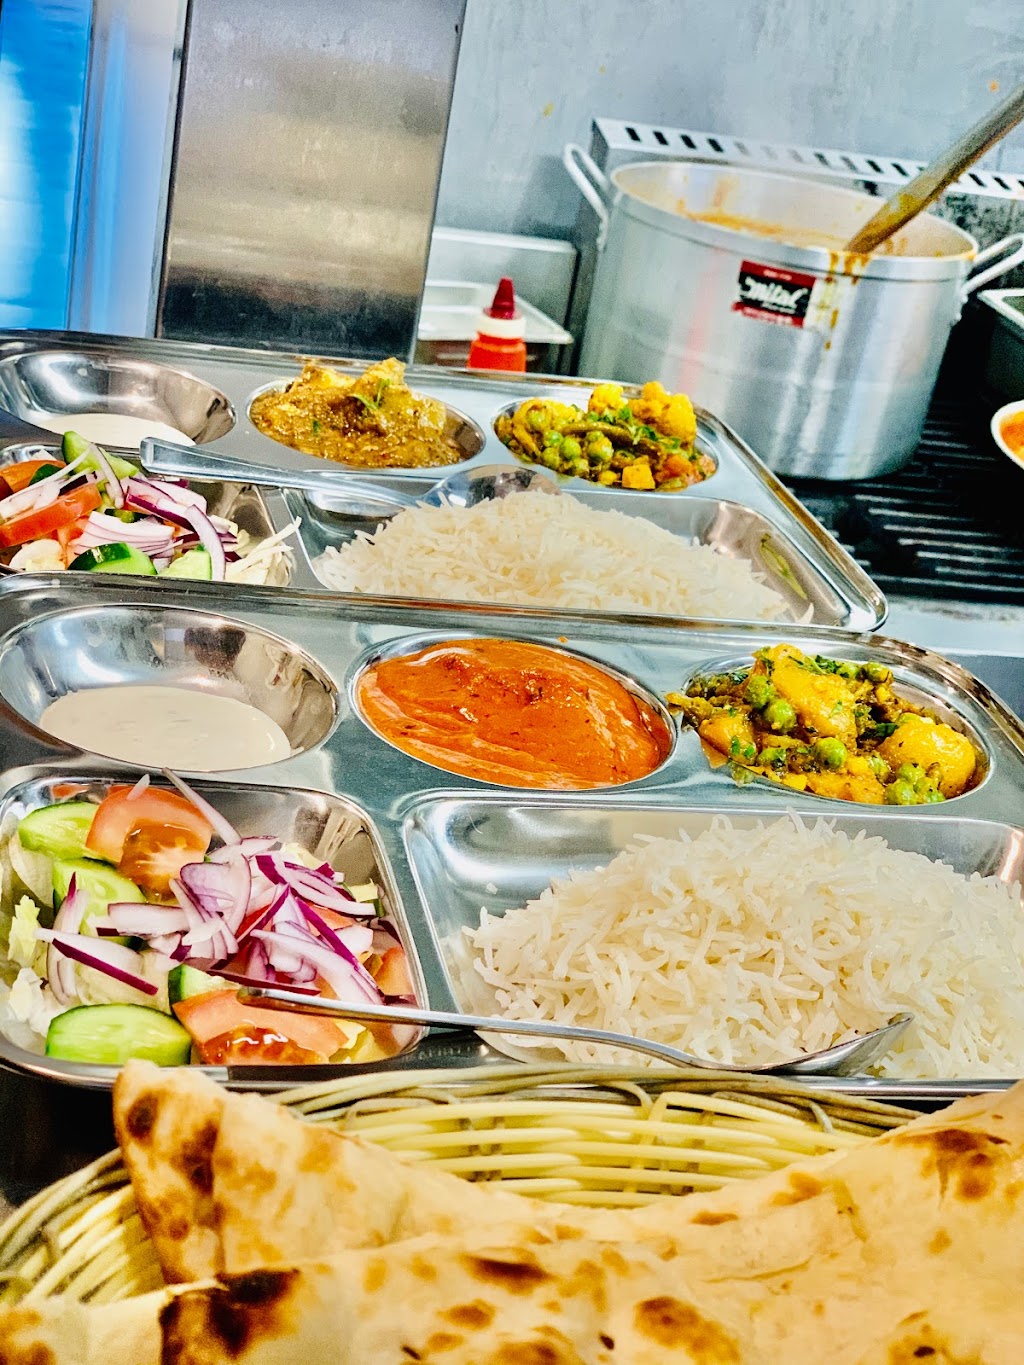 Sanjah Punjab Indian & Pakistani Restaurant | restaurant | 90 Reservoir Rd, Blacktown NSW 2148, Australia | 0286322563 OR +61 2 8632 2563